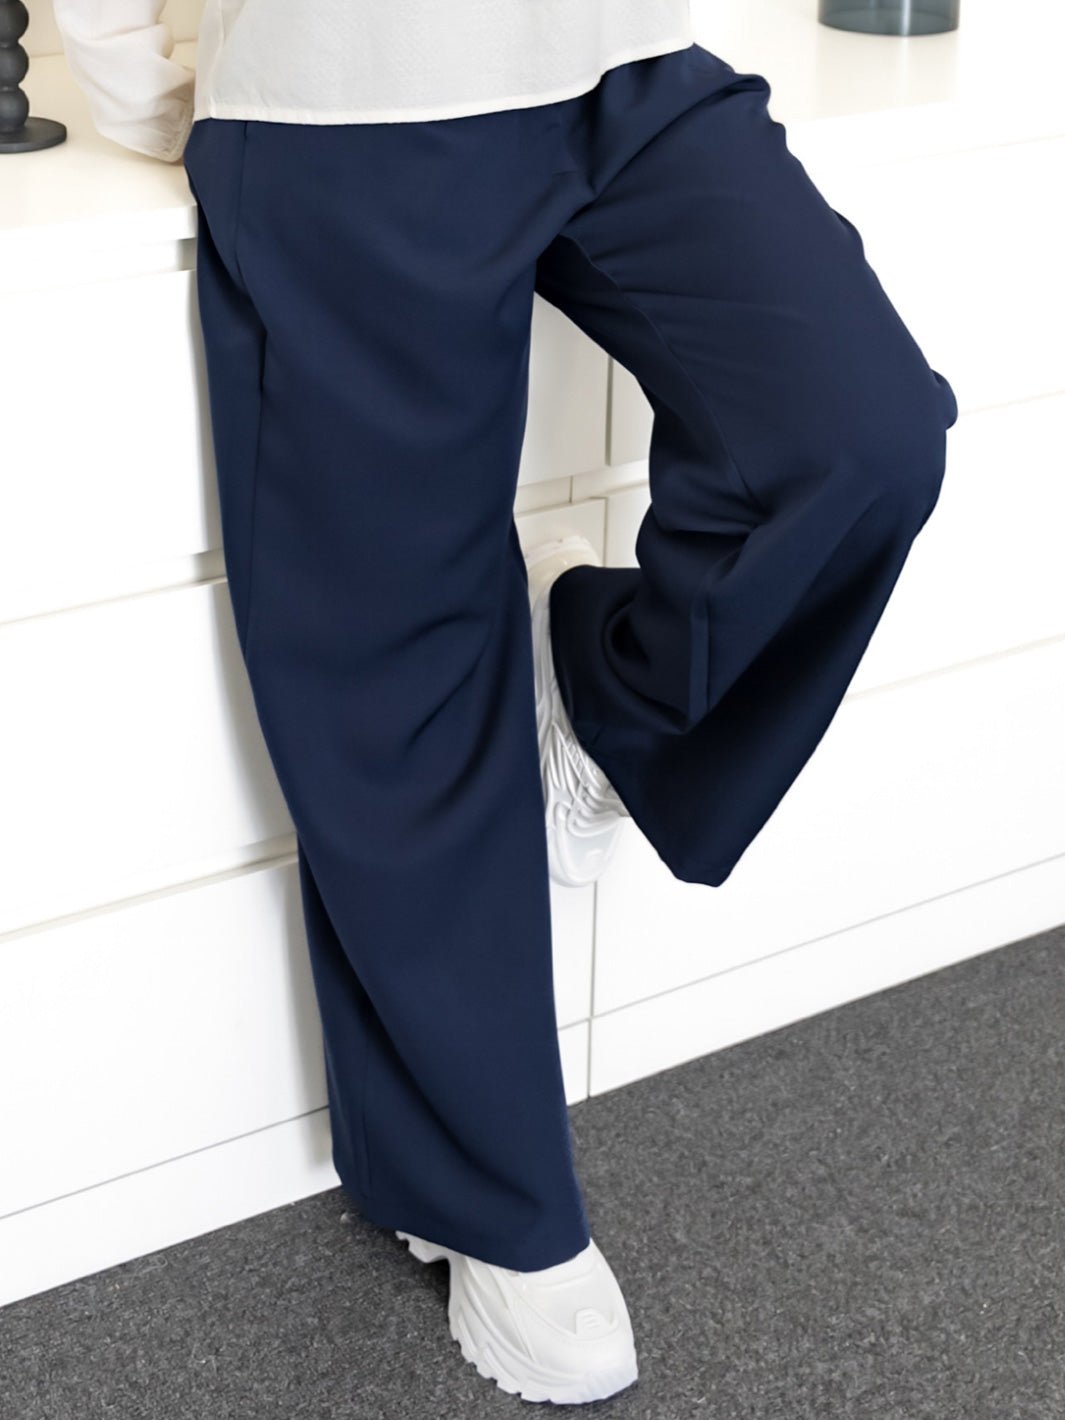 All Week Canja wide pants navy blue - Online-Mode